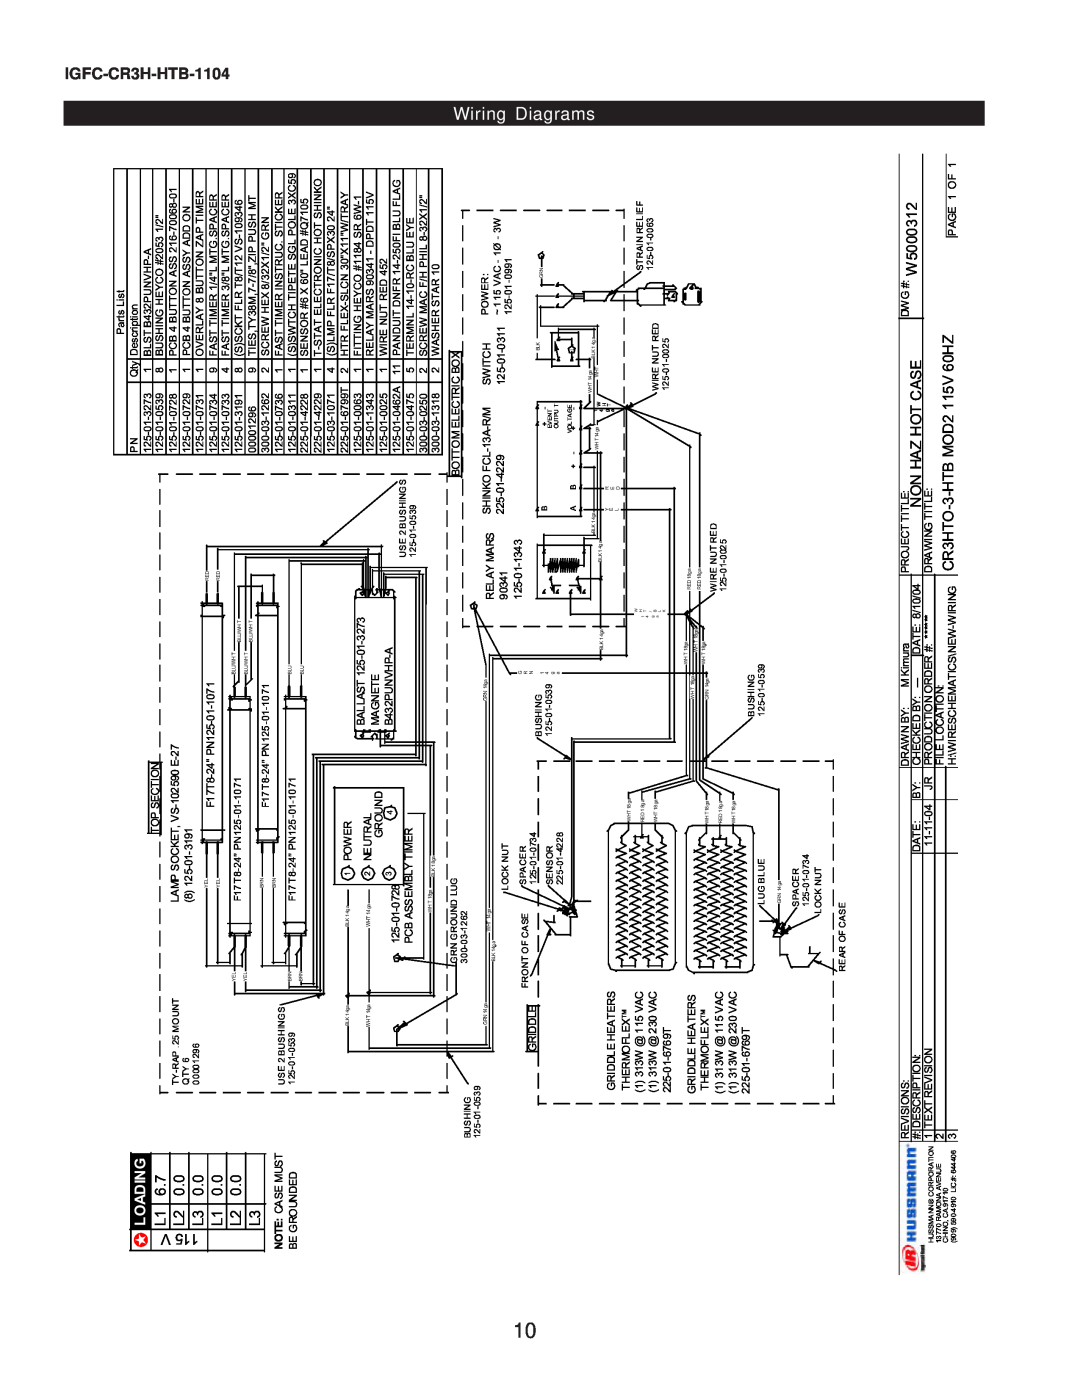 hussman CR3HTO-HTB operation manual Wiring Diagrams, IGFC-CR3H-HTB-1104, Neutral 